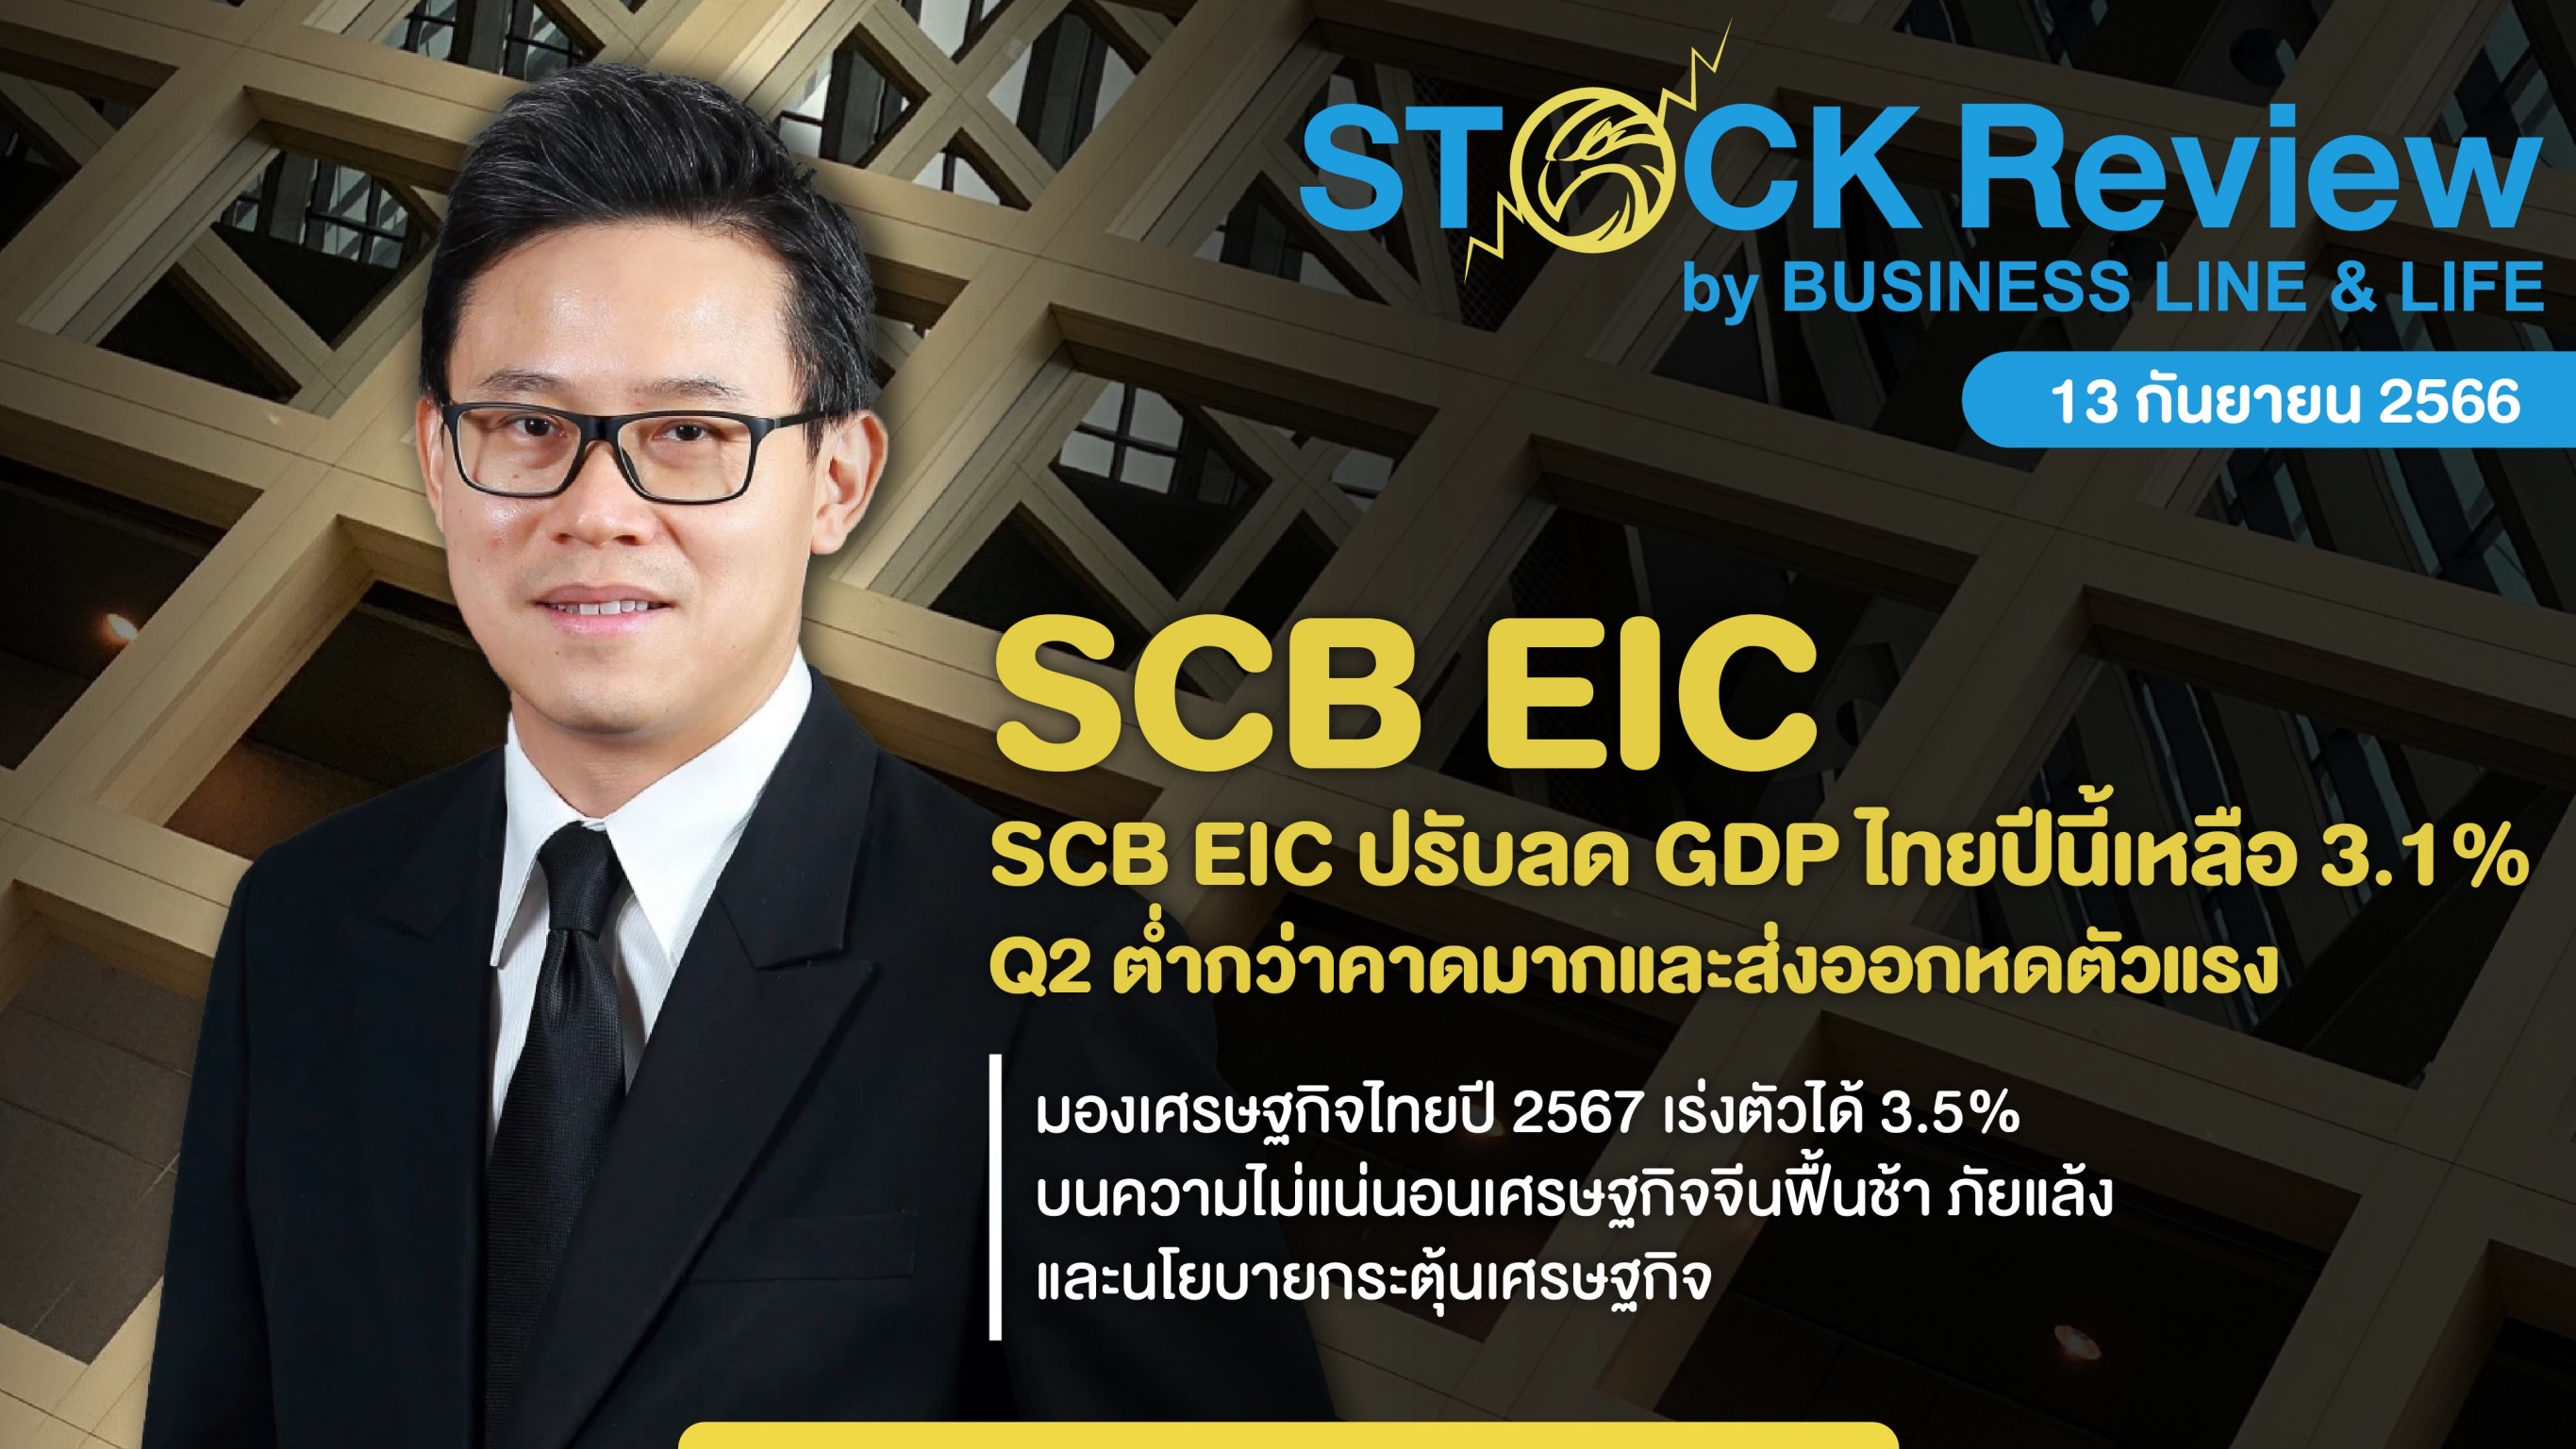 SCB EIC ปรับลด GDP ไทยปีนี้เหลือ 3.1%